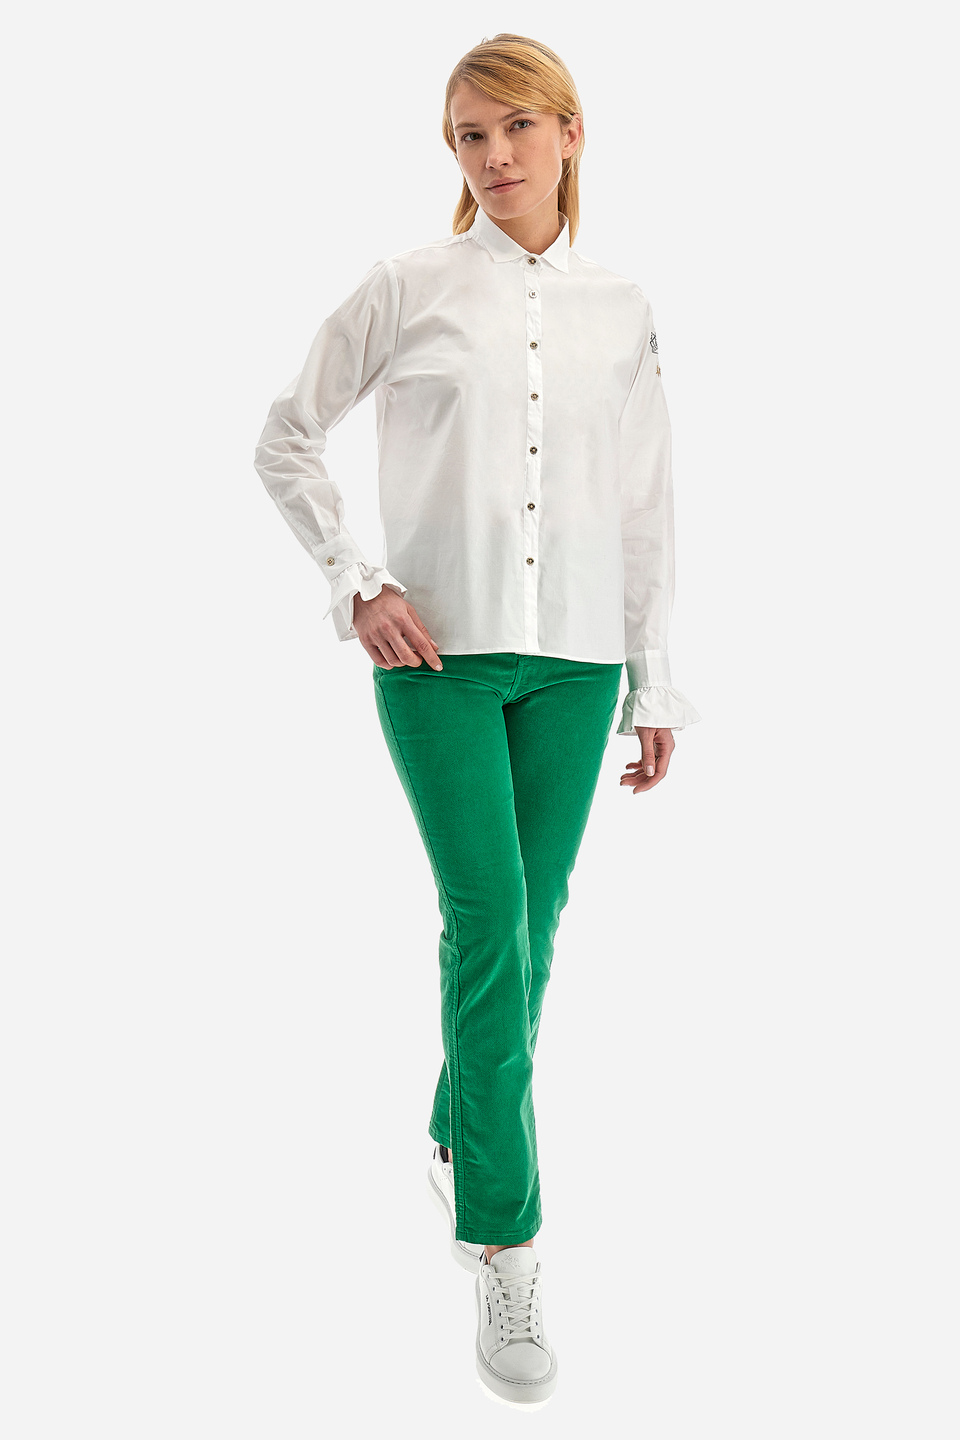 Damen -Hemd regular fit - Welbie | La Martina - Official Online Shop